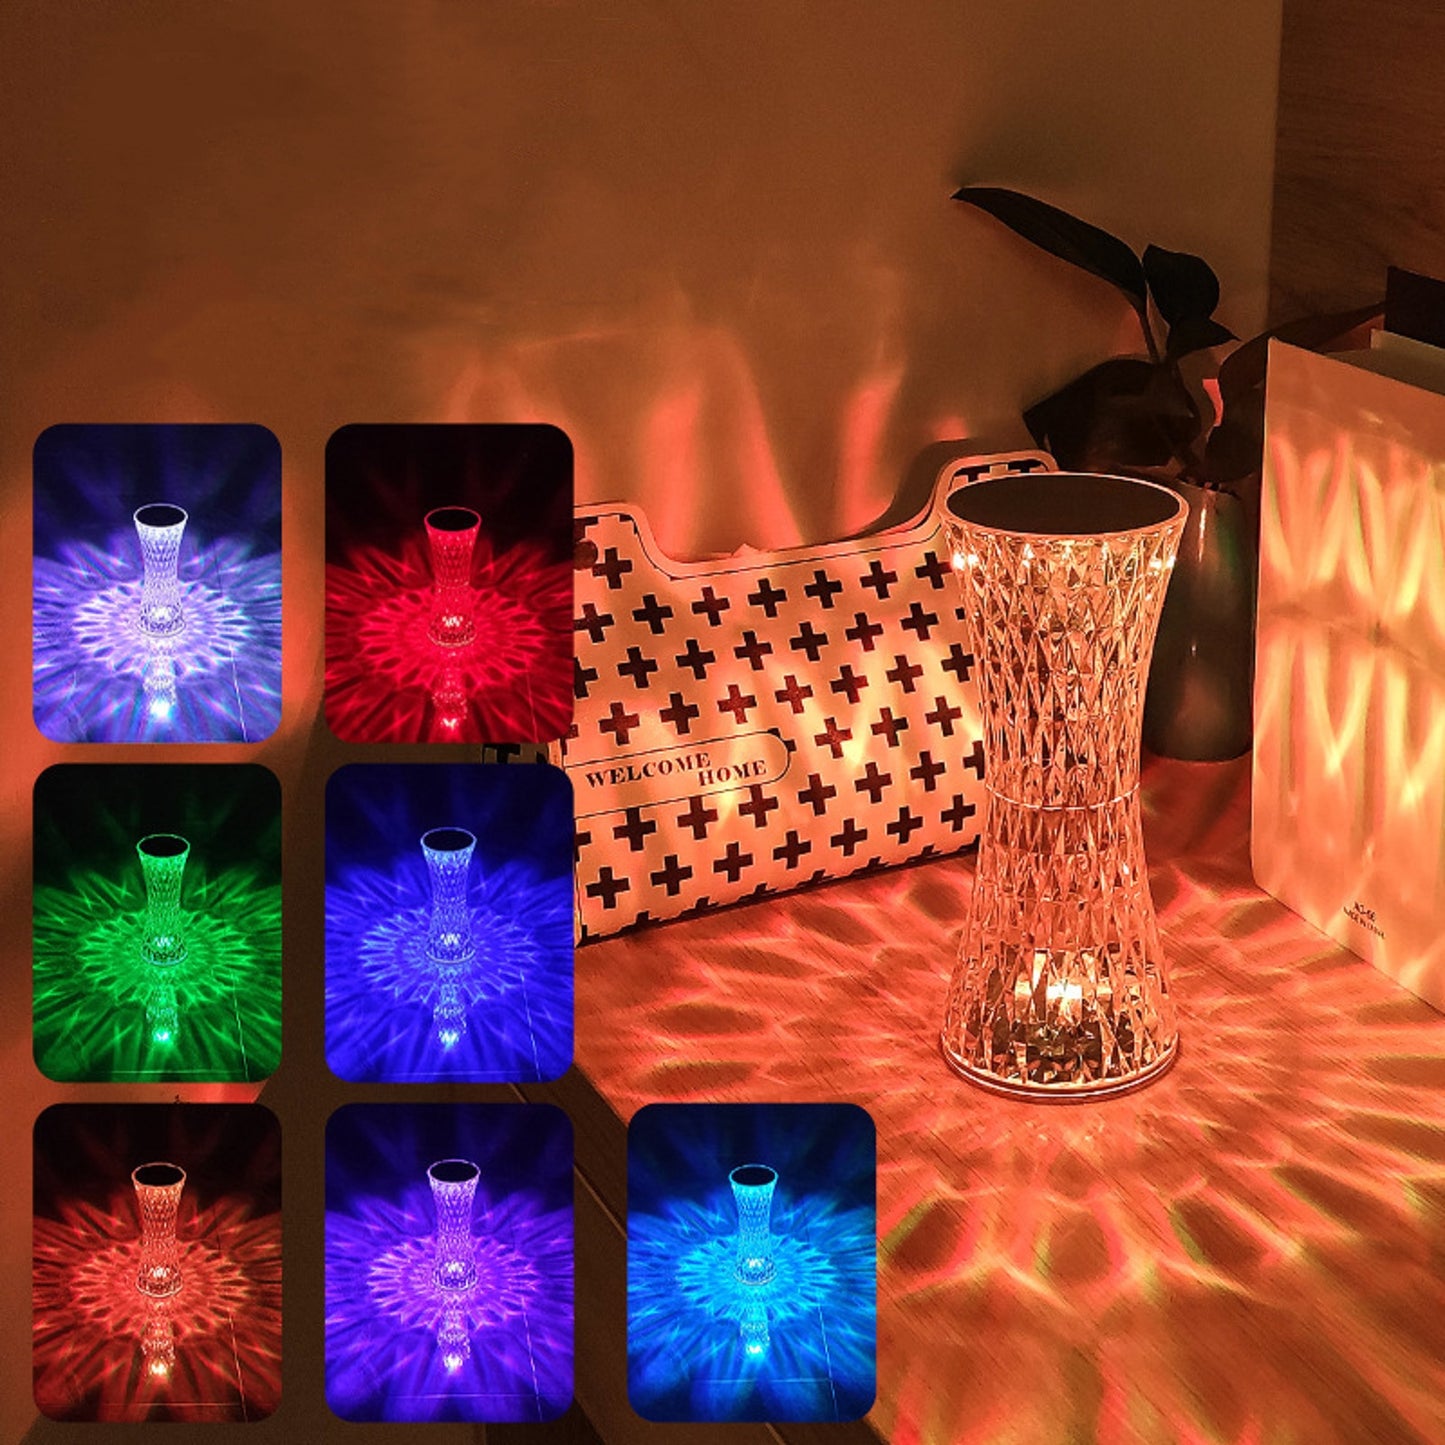 LED Ramadan Decorative Table Lamp (16 Colors) with Remote – Unique Occasion